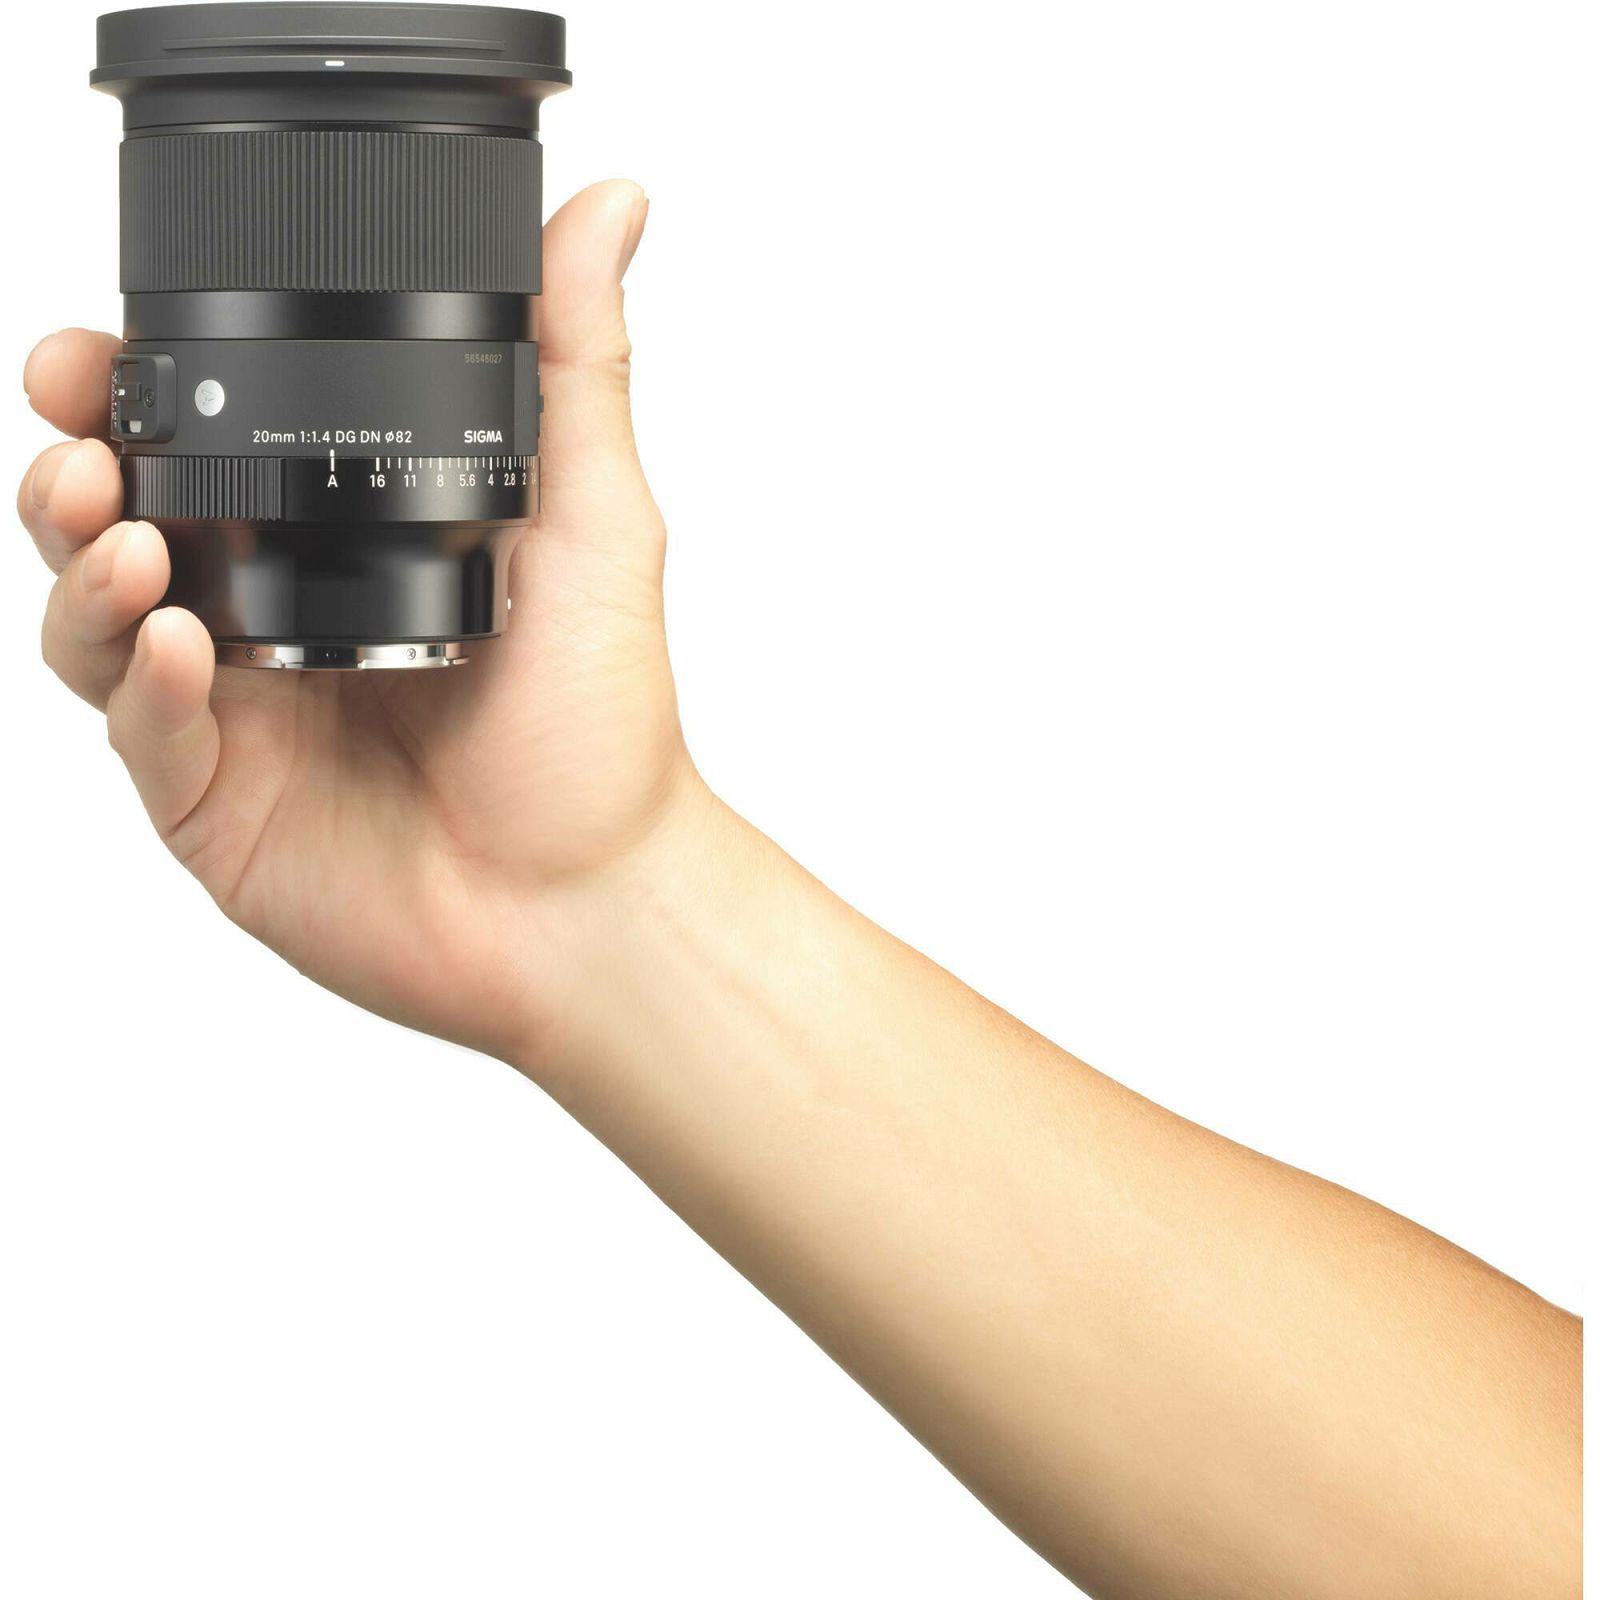 Sigma AF 20mm f/1.4 DG DN Art širokokutni objektiv za Sony FE E-mount